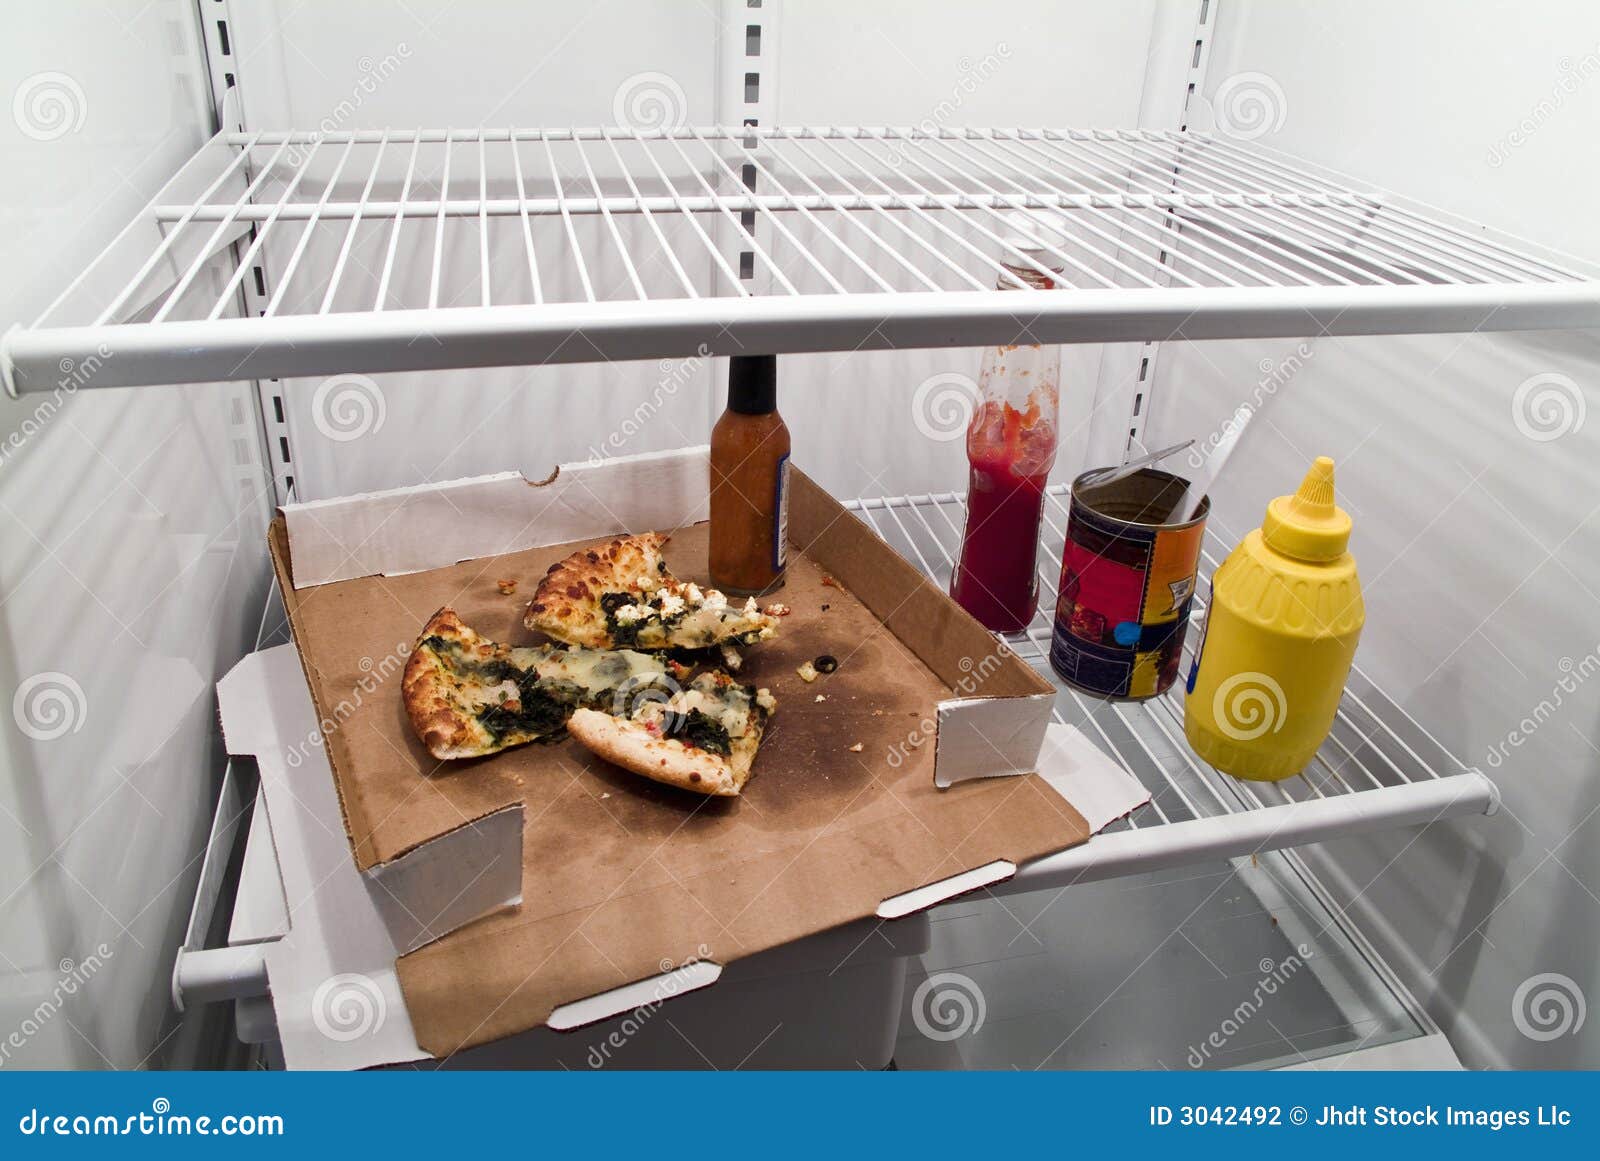 Refrigerator Stock Photography - Image: 3042492